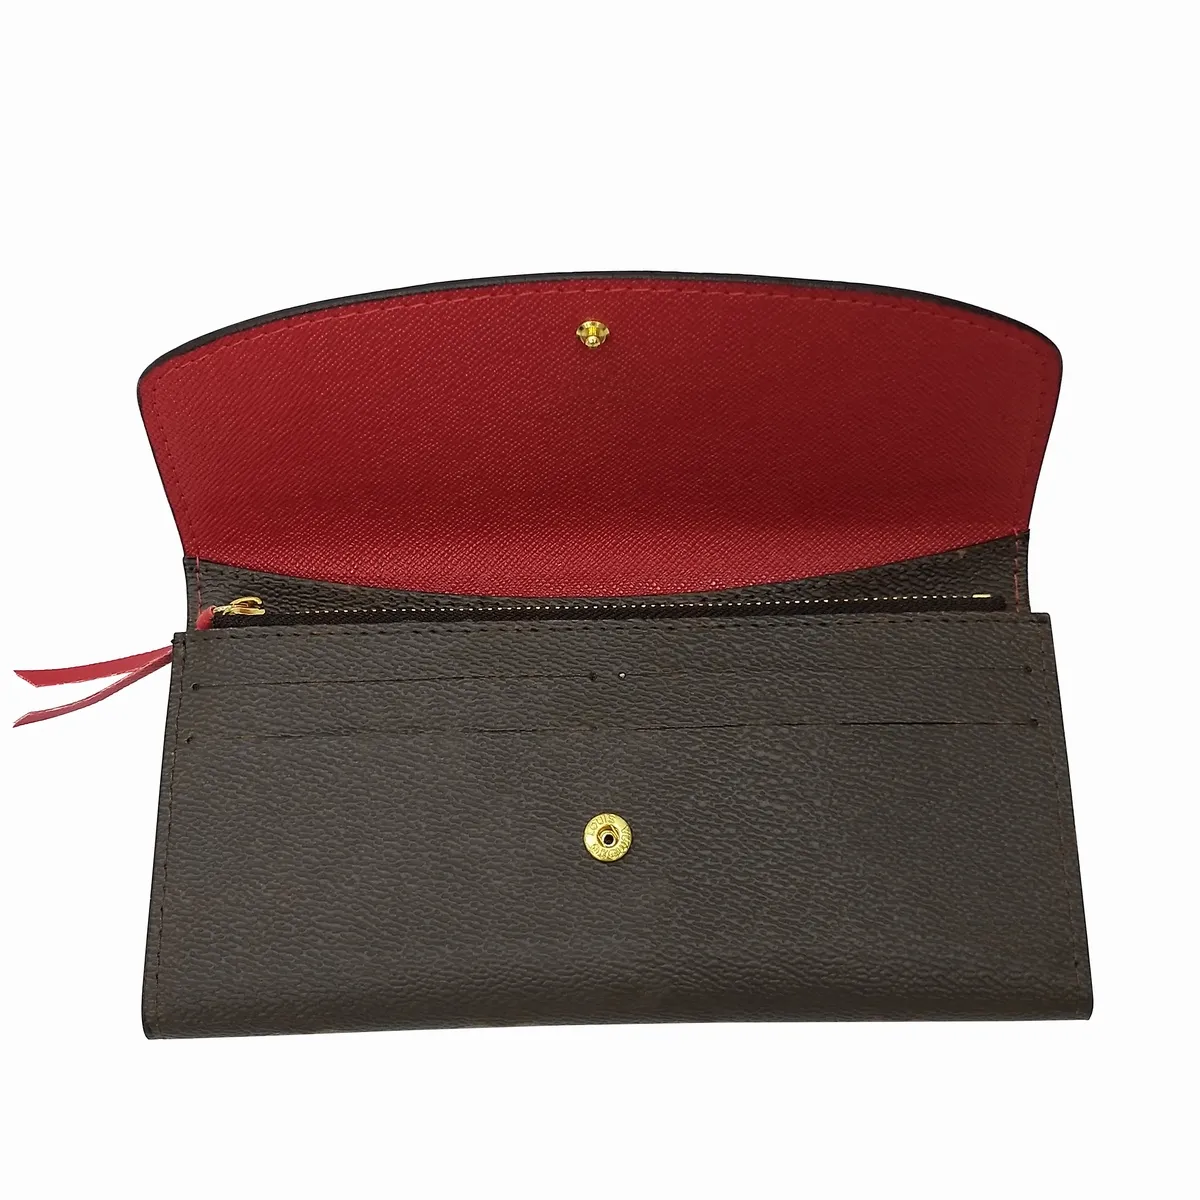 Kvinnor Clutch plånbok äkta läder plånbok singel blixtlås plånböcker dam damer lång klassisk handväska med orange låda kort196m